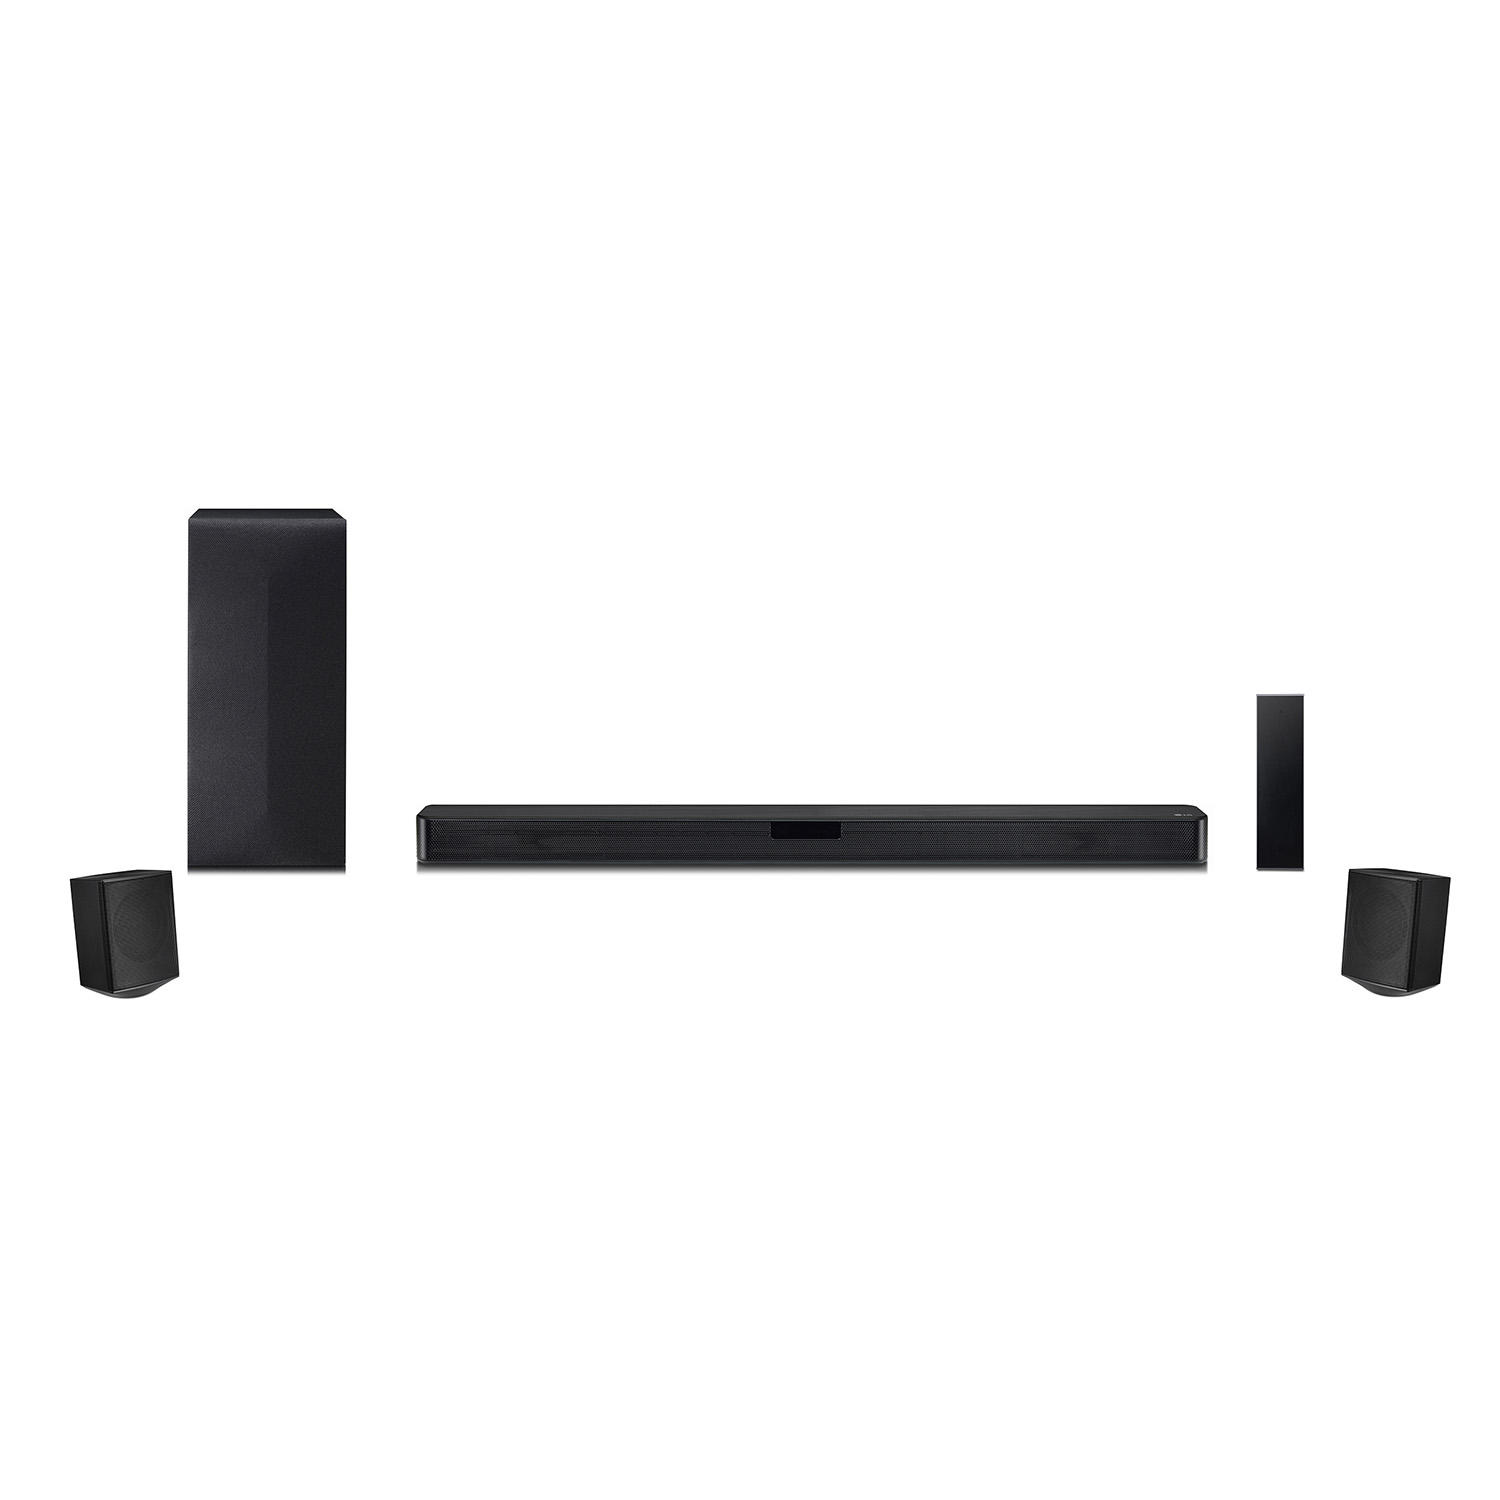 LG SNC4R 4.1 Channel Soundbar with Surround Sound Speakers, Black - image 1 of 2